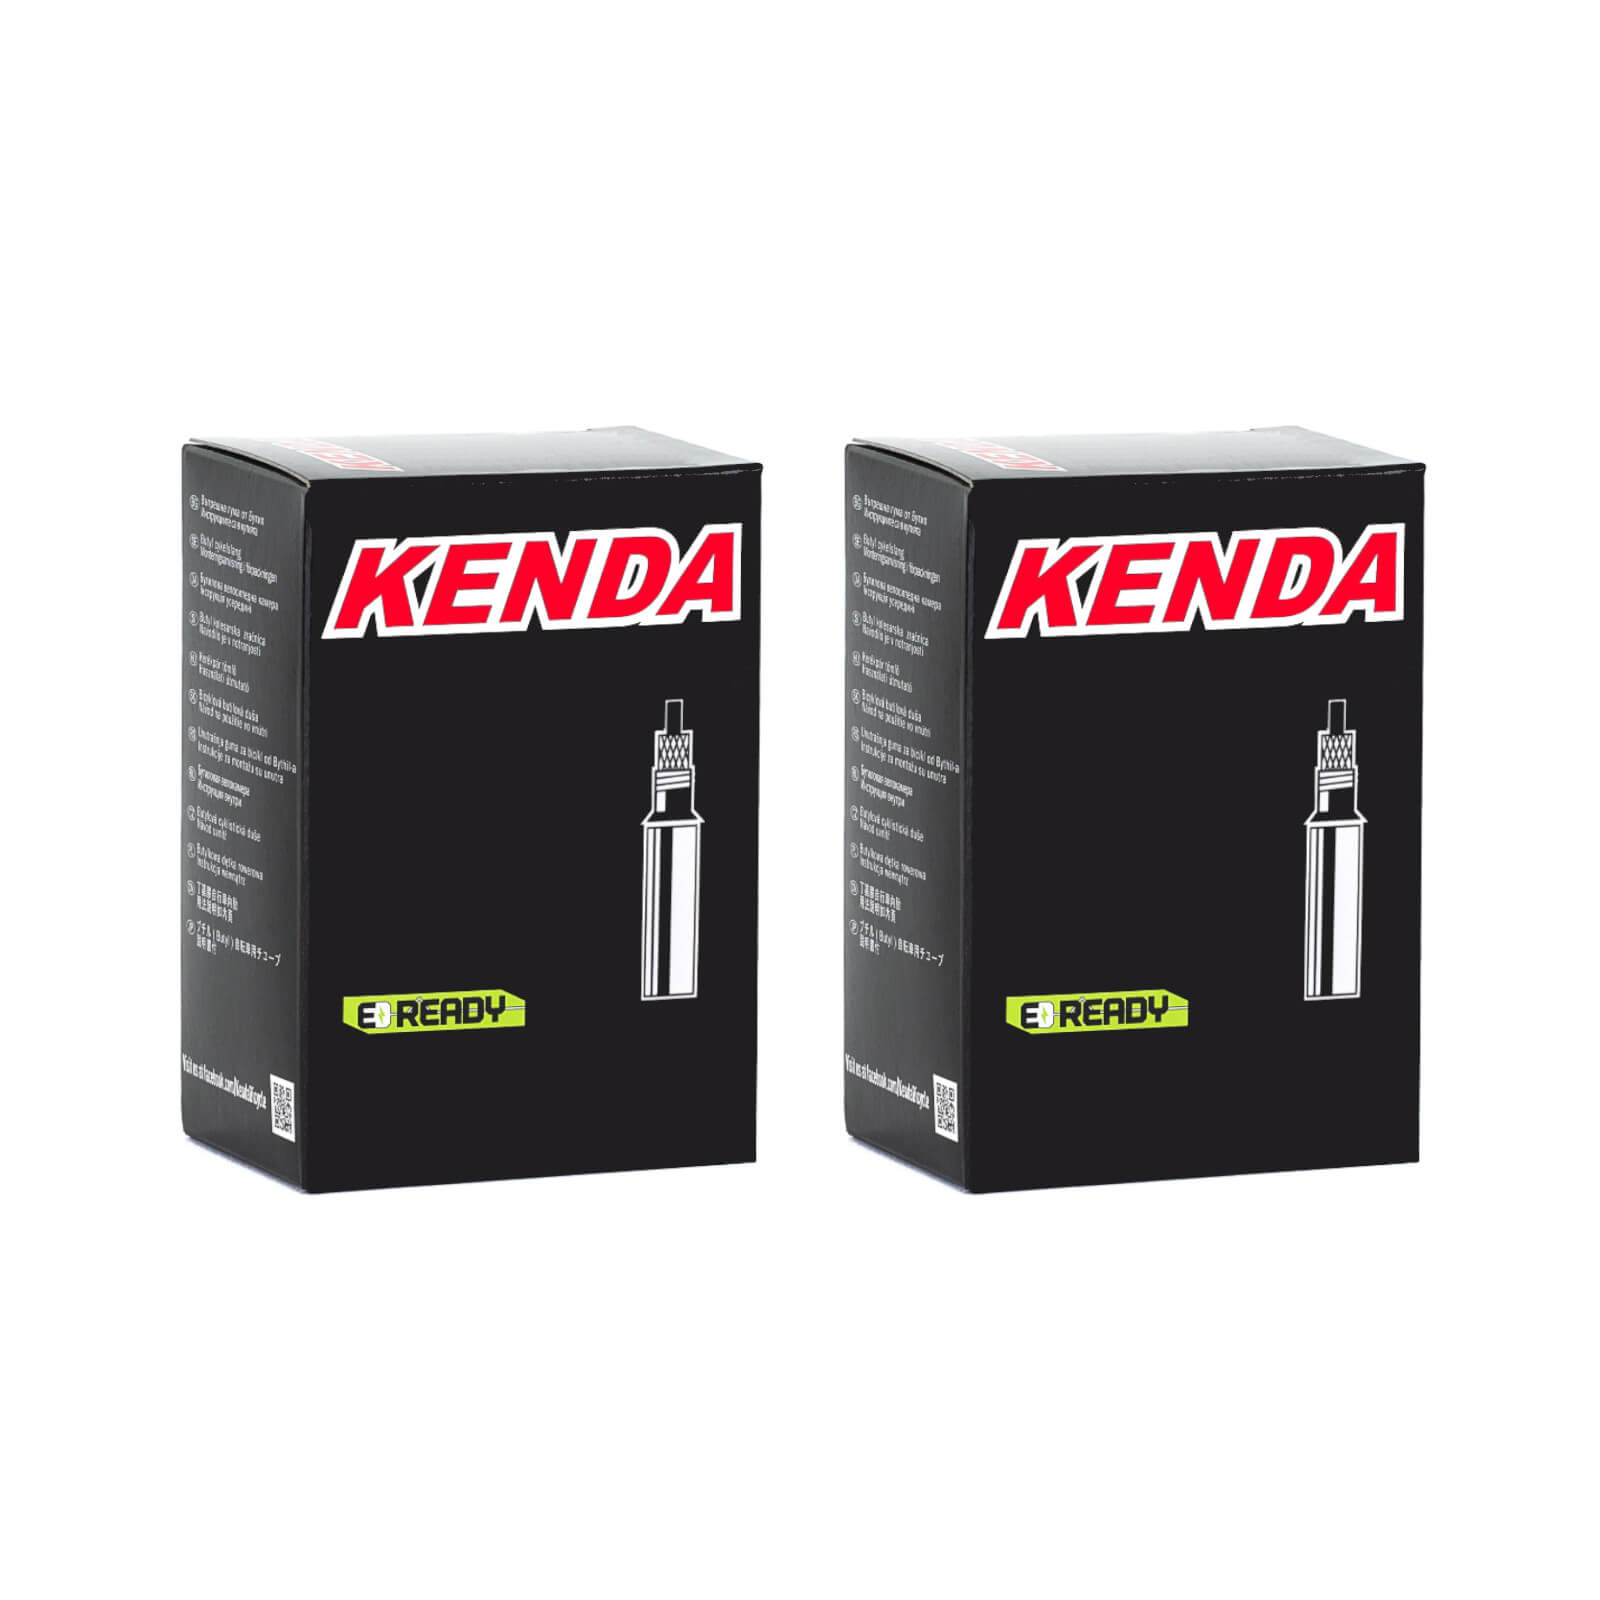 Kenda 29x2.4-2.8" 29 Inch Presta Valve Bike Inner Tube Pack of 2